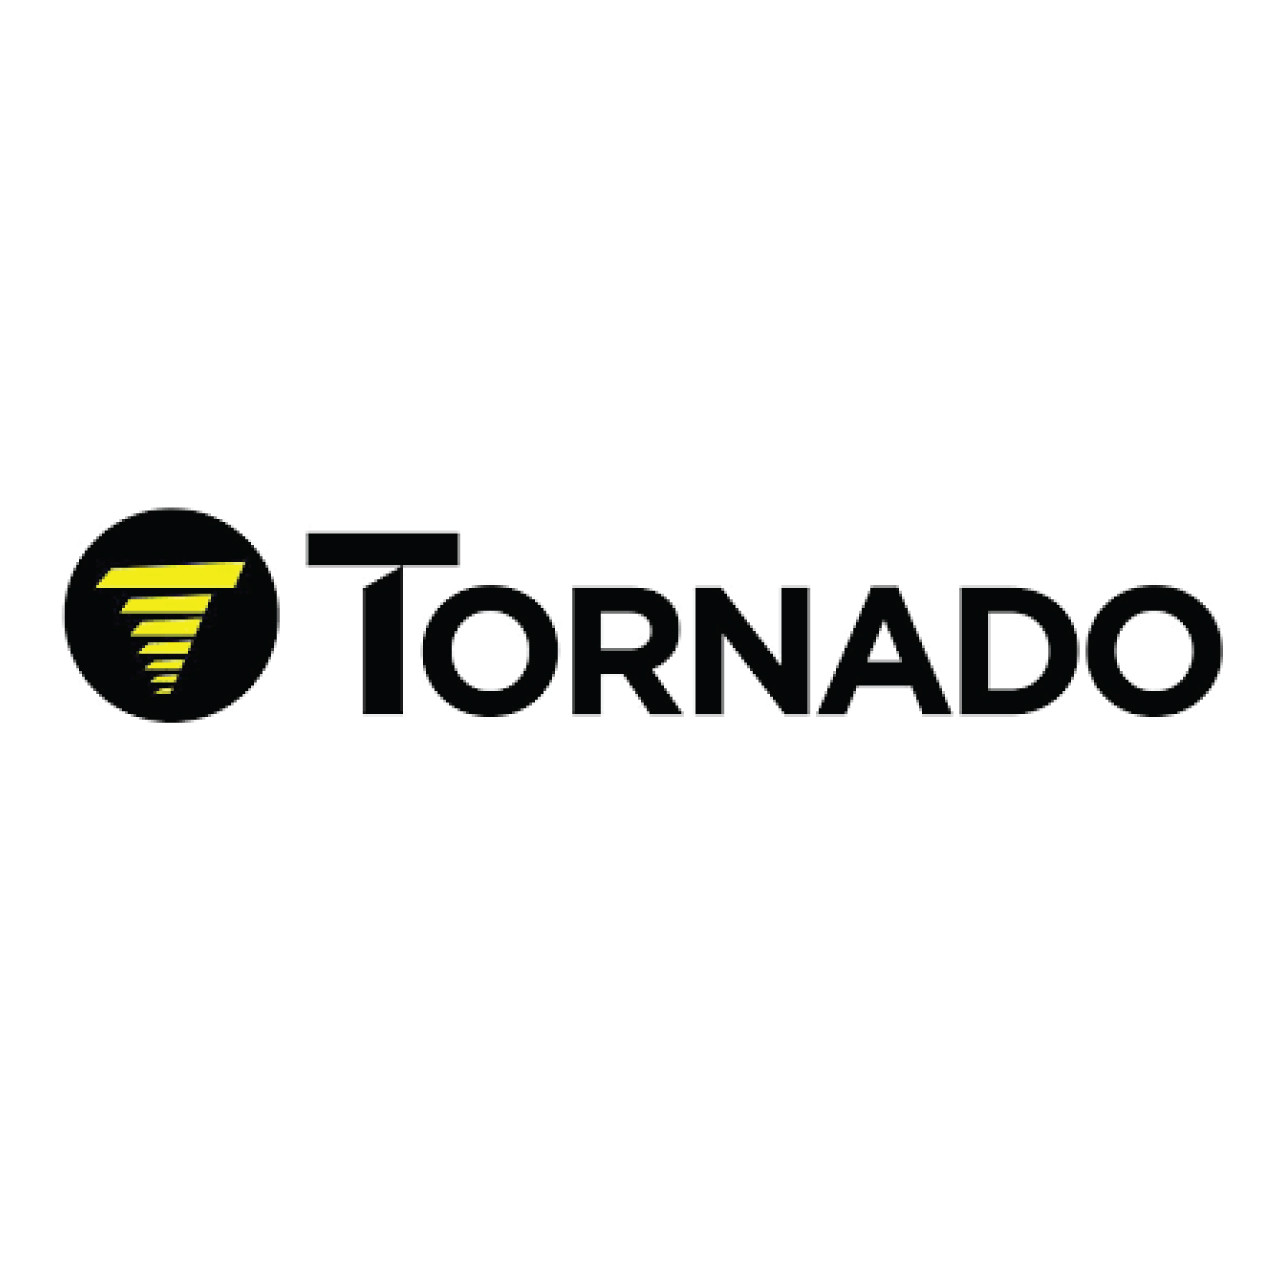 02-4372-0000, Tornado 02-4372-0000, Tornado PAPER BAG FOR X46 SELF-SEALING (PACK OF 10), Tornado parts